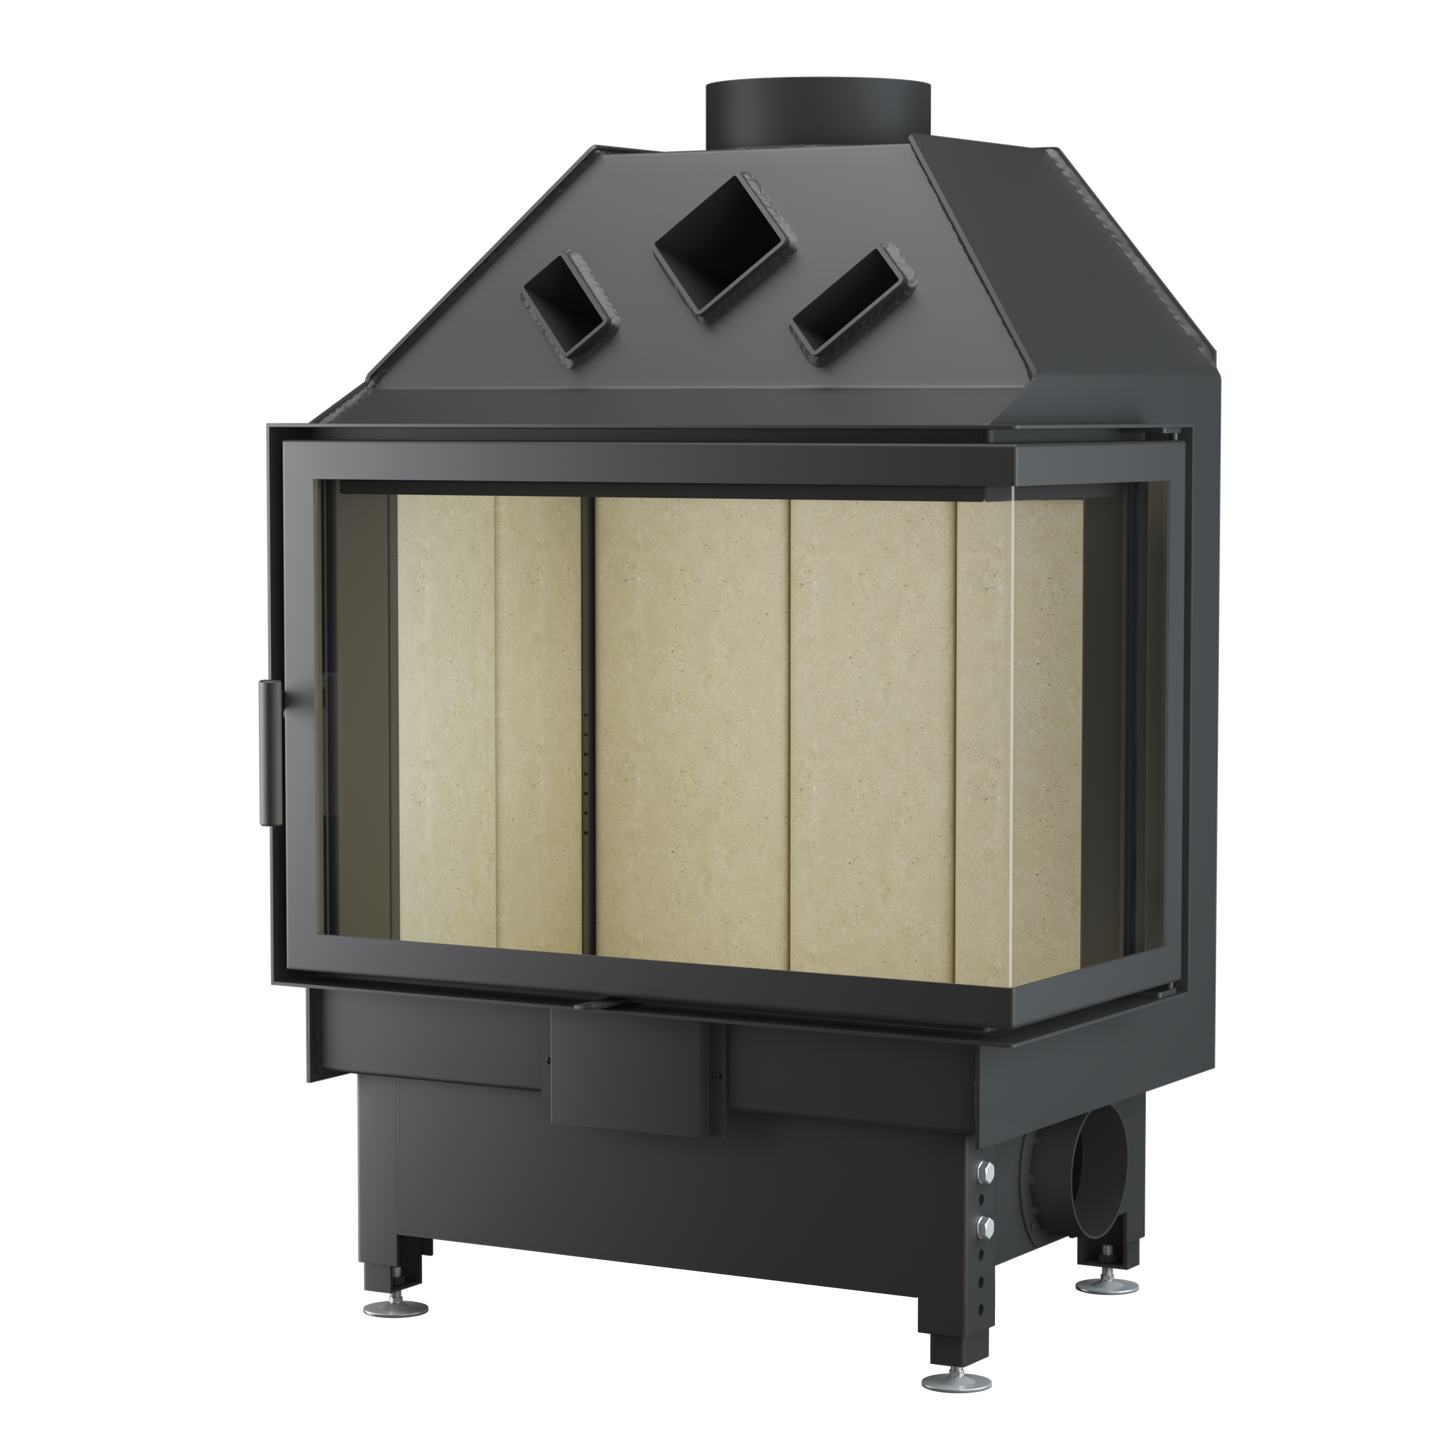 DRAGON 4B XL - Fireplace Insert Anti-Smog Ecofriendly Modern Steel